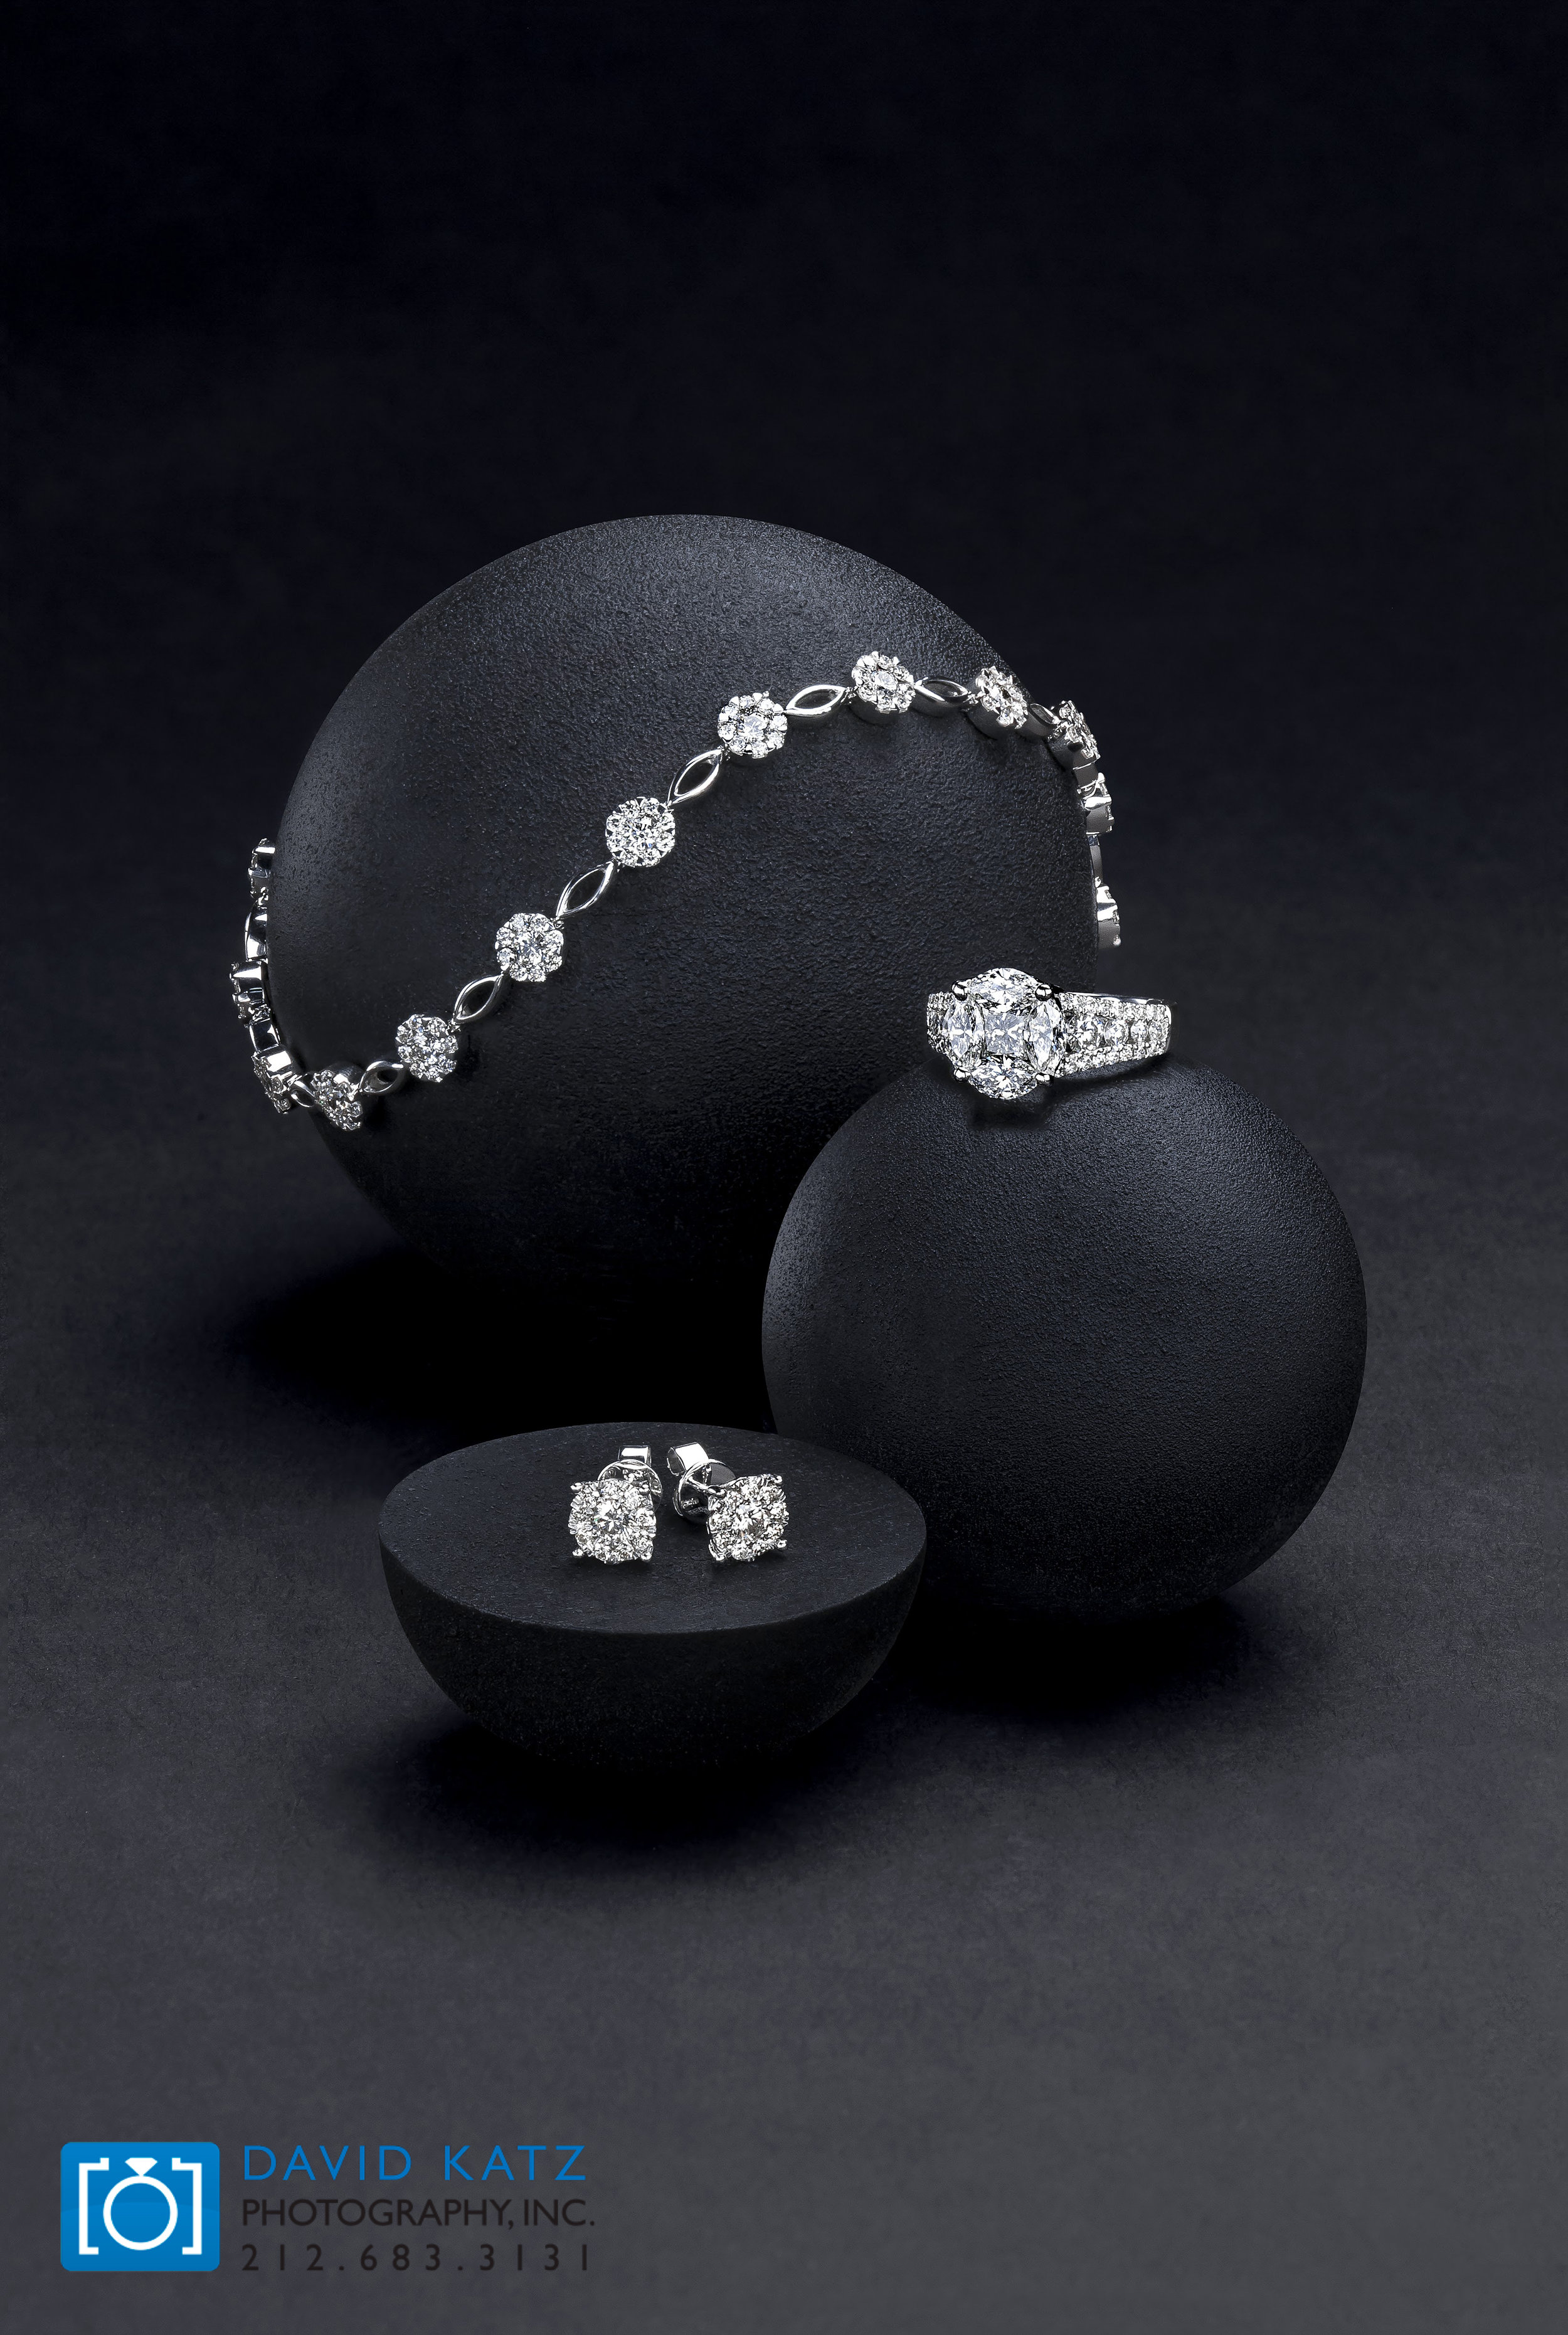 Earring RIng Bracelet Jewelry Lifestyle Group on Balls.jpg